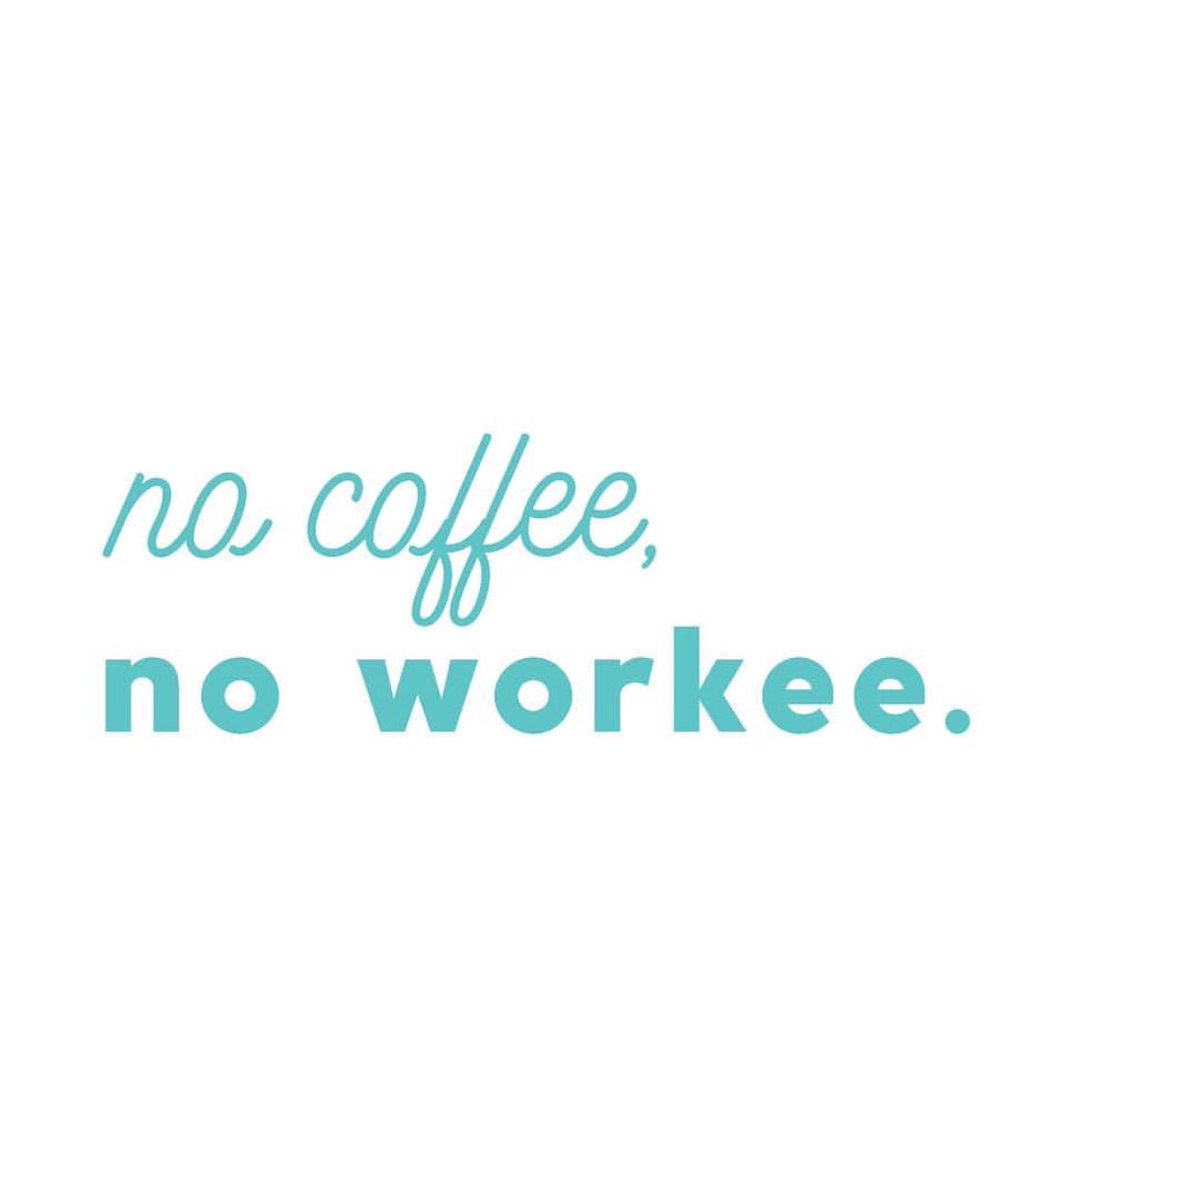 The rules are simple. ☕️☕️☕️ #CoffeeTime #NoCoffeeNoWorkee https://t.co/CDV6VzEviq